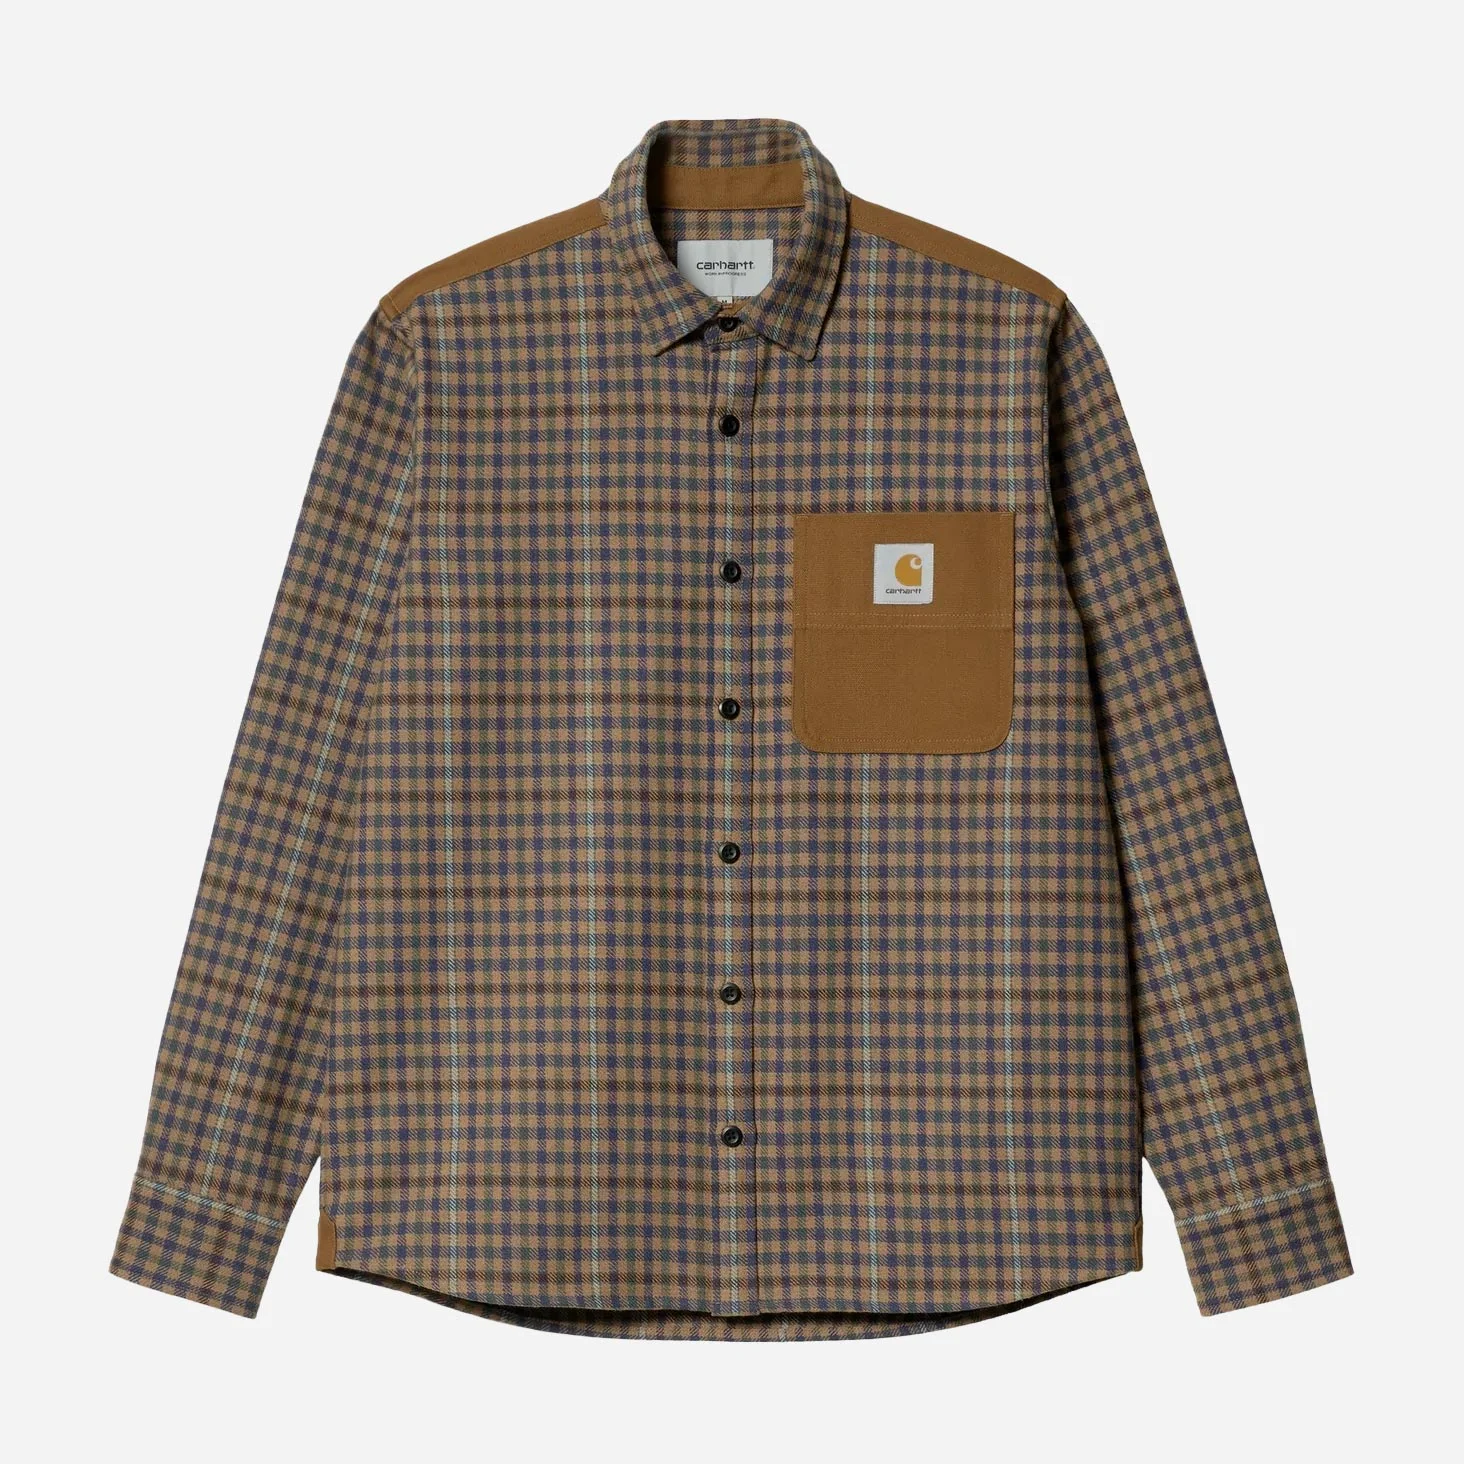 Carhartt WIP Asher Long Sleeve Shirt - Asher Check/Jasper/Hamilton Brown